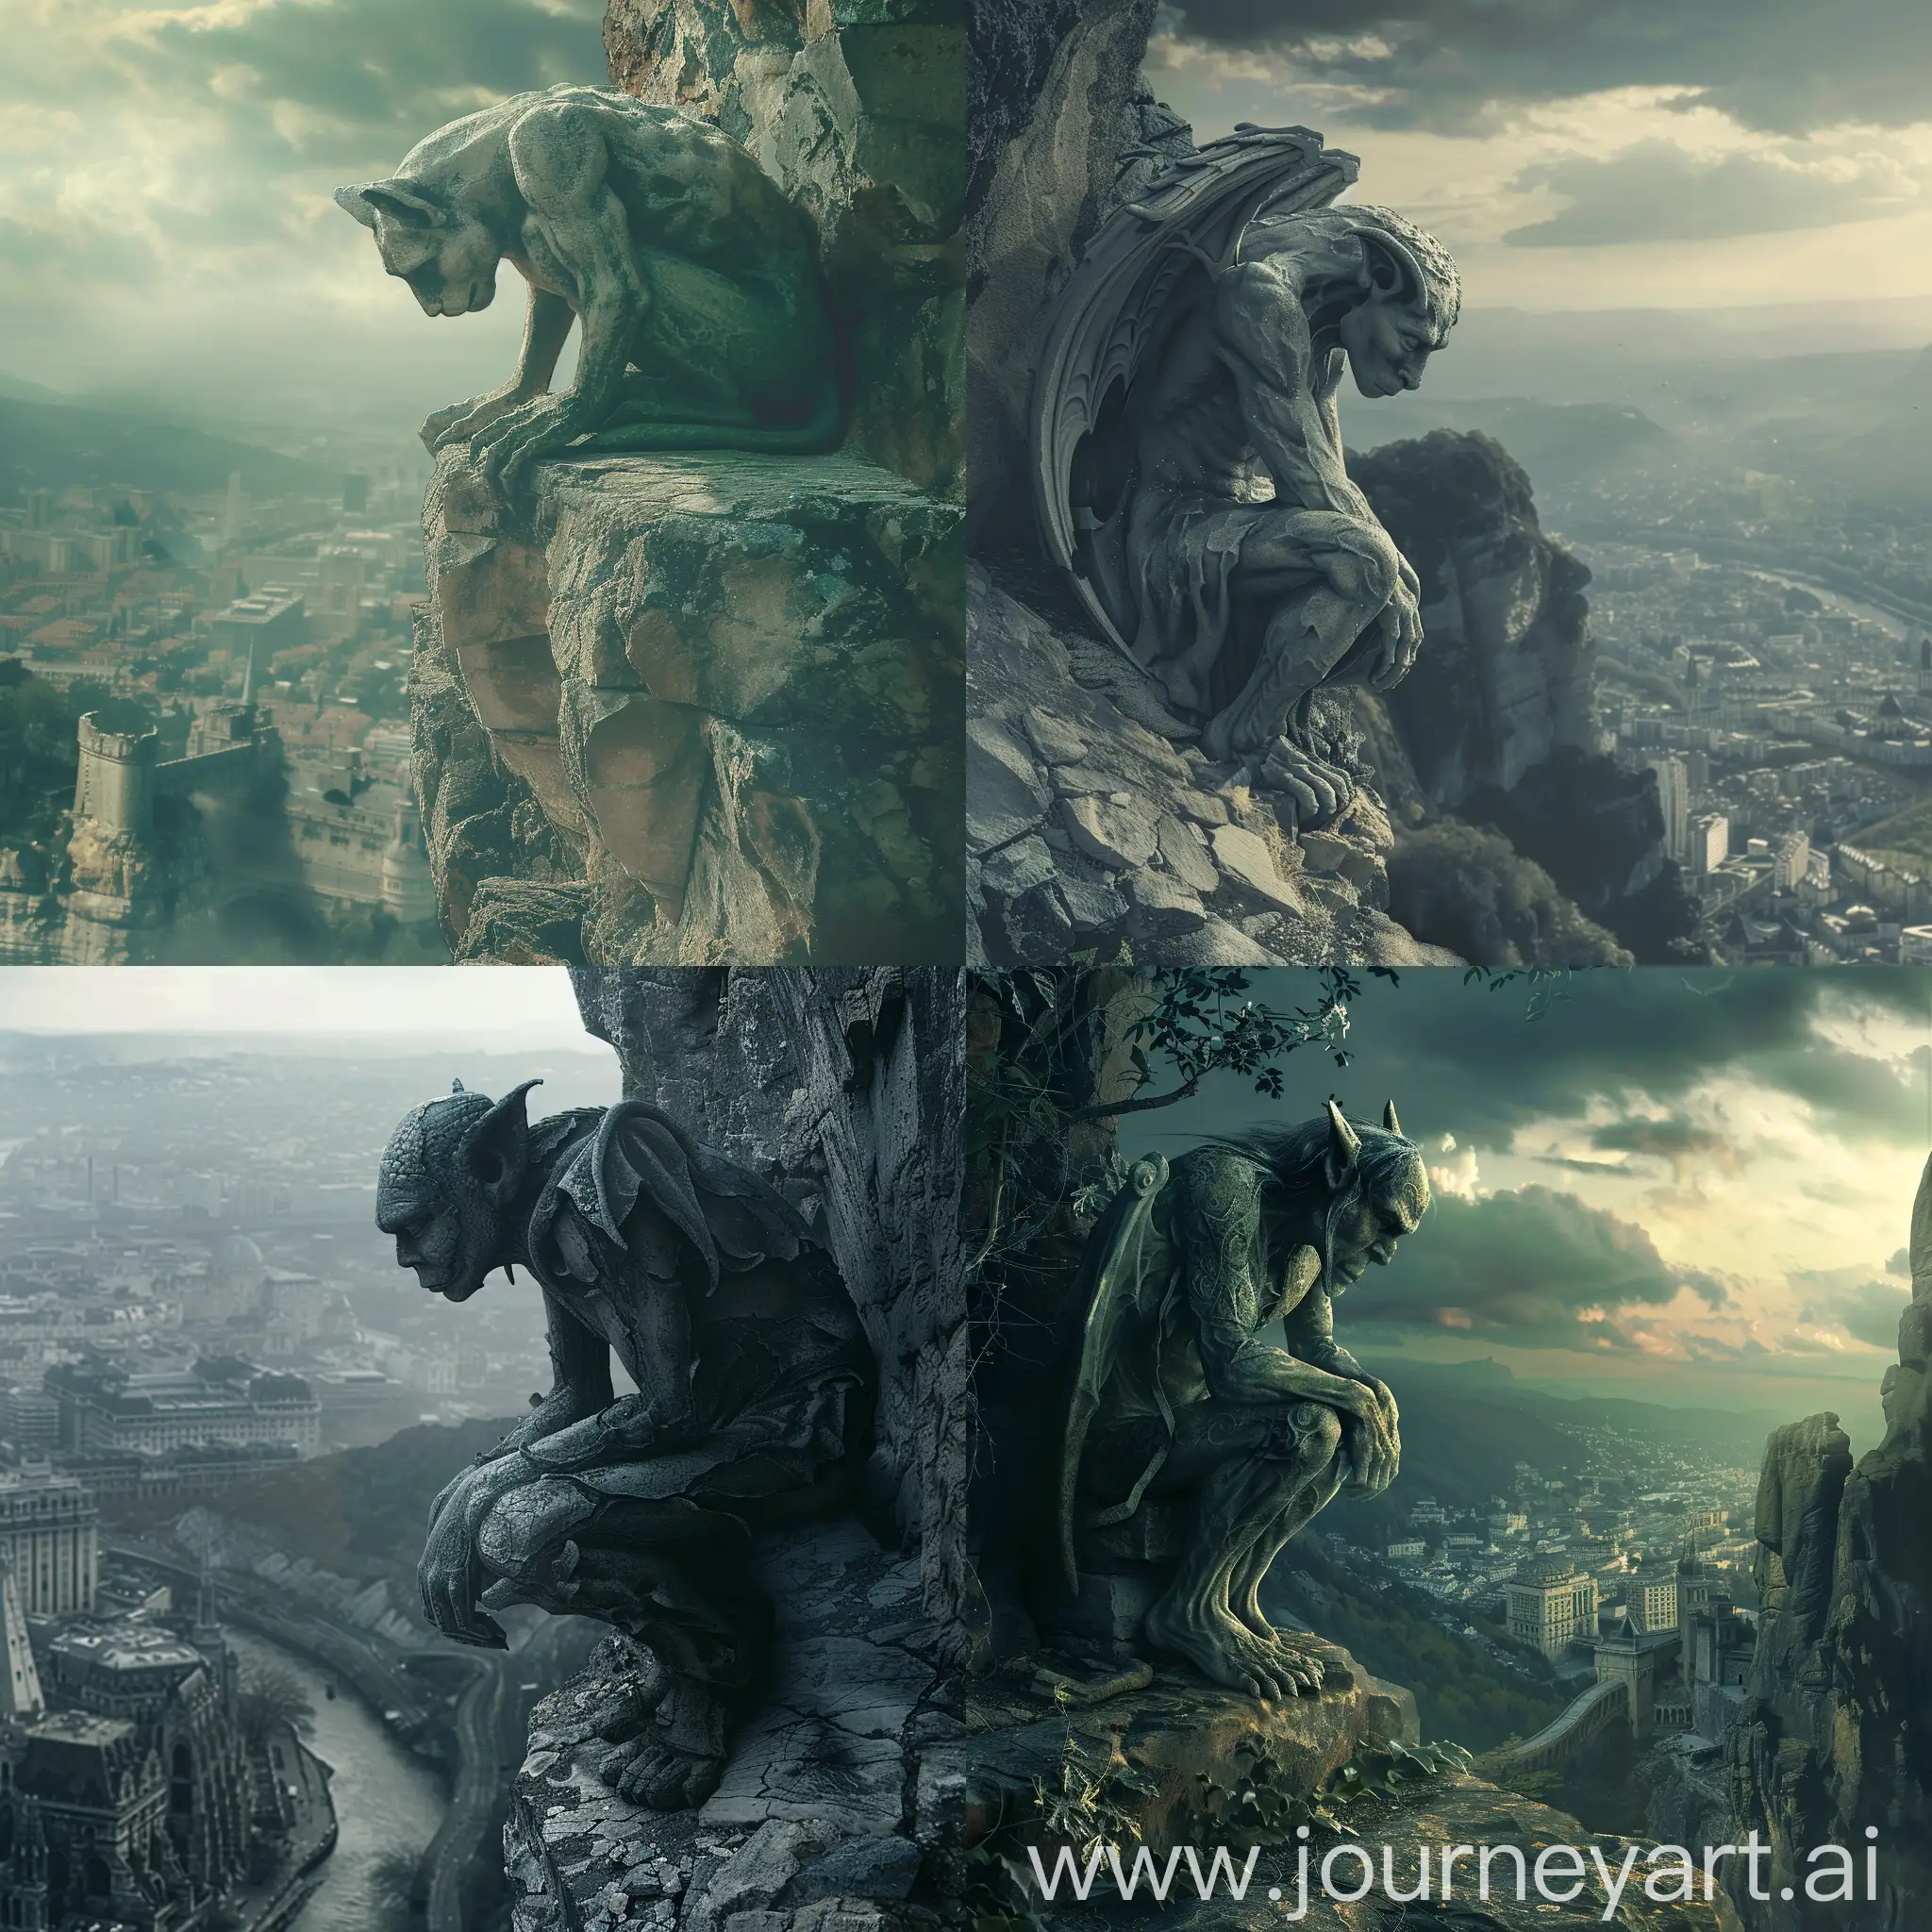 Lonely-Gargoyle-Gazing-Over-City-Surreal-Fantasy-Art